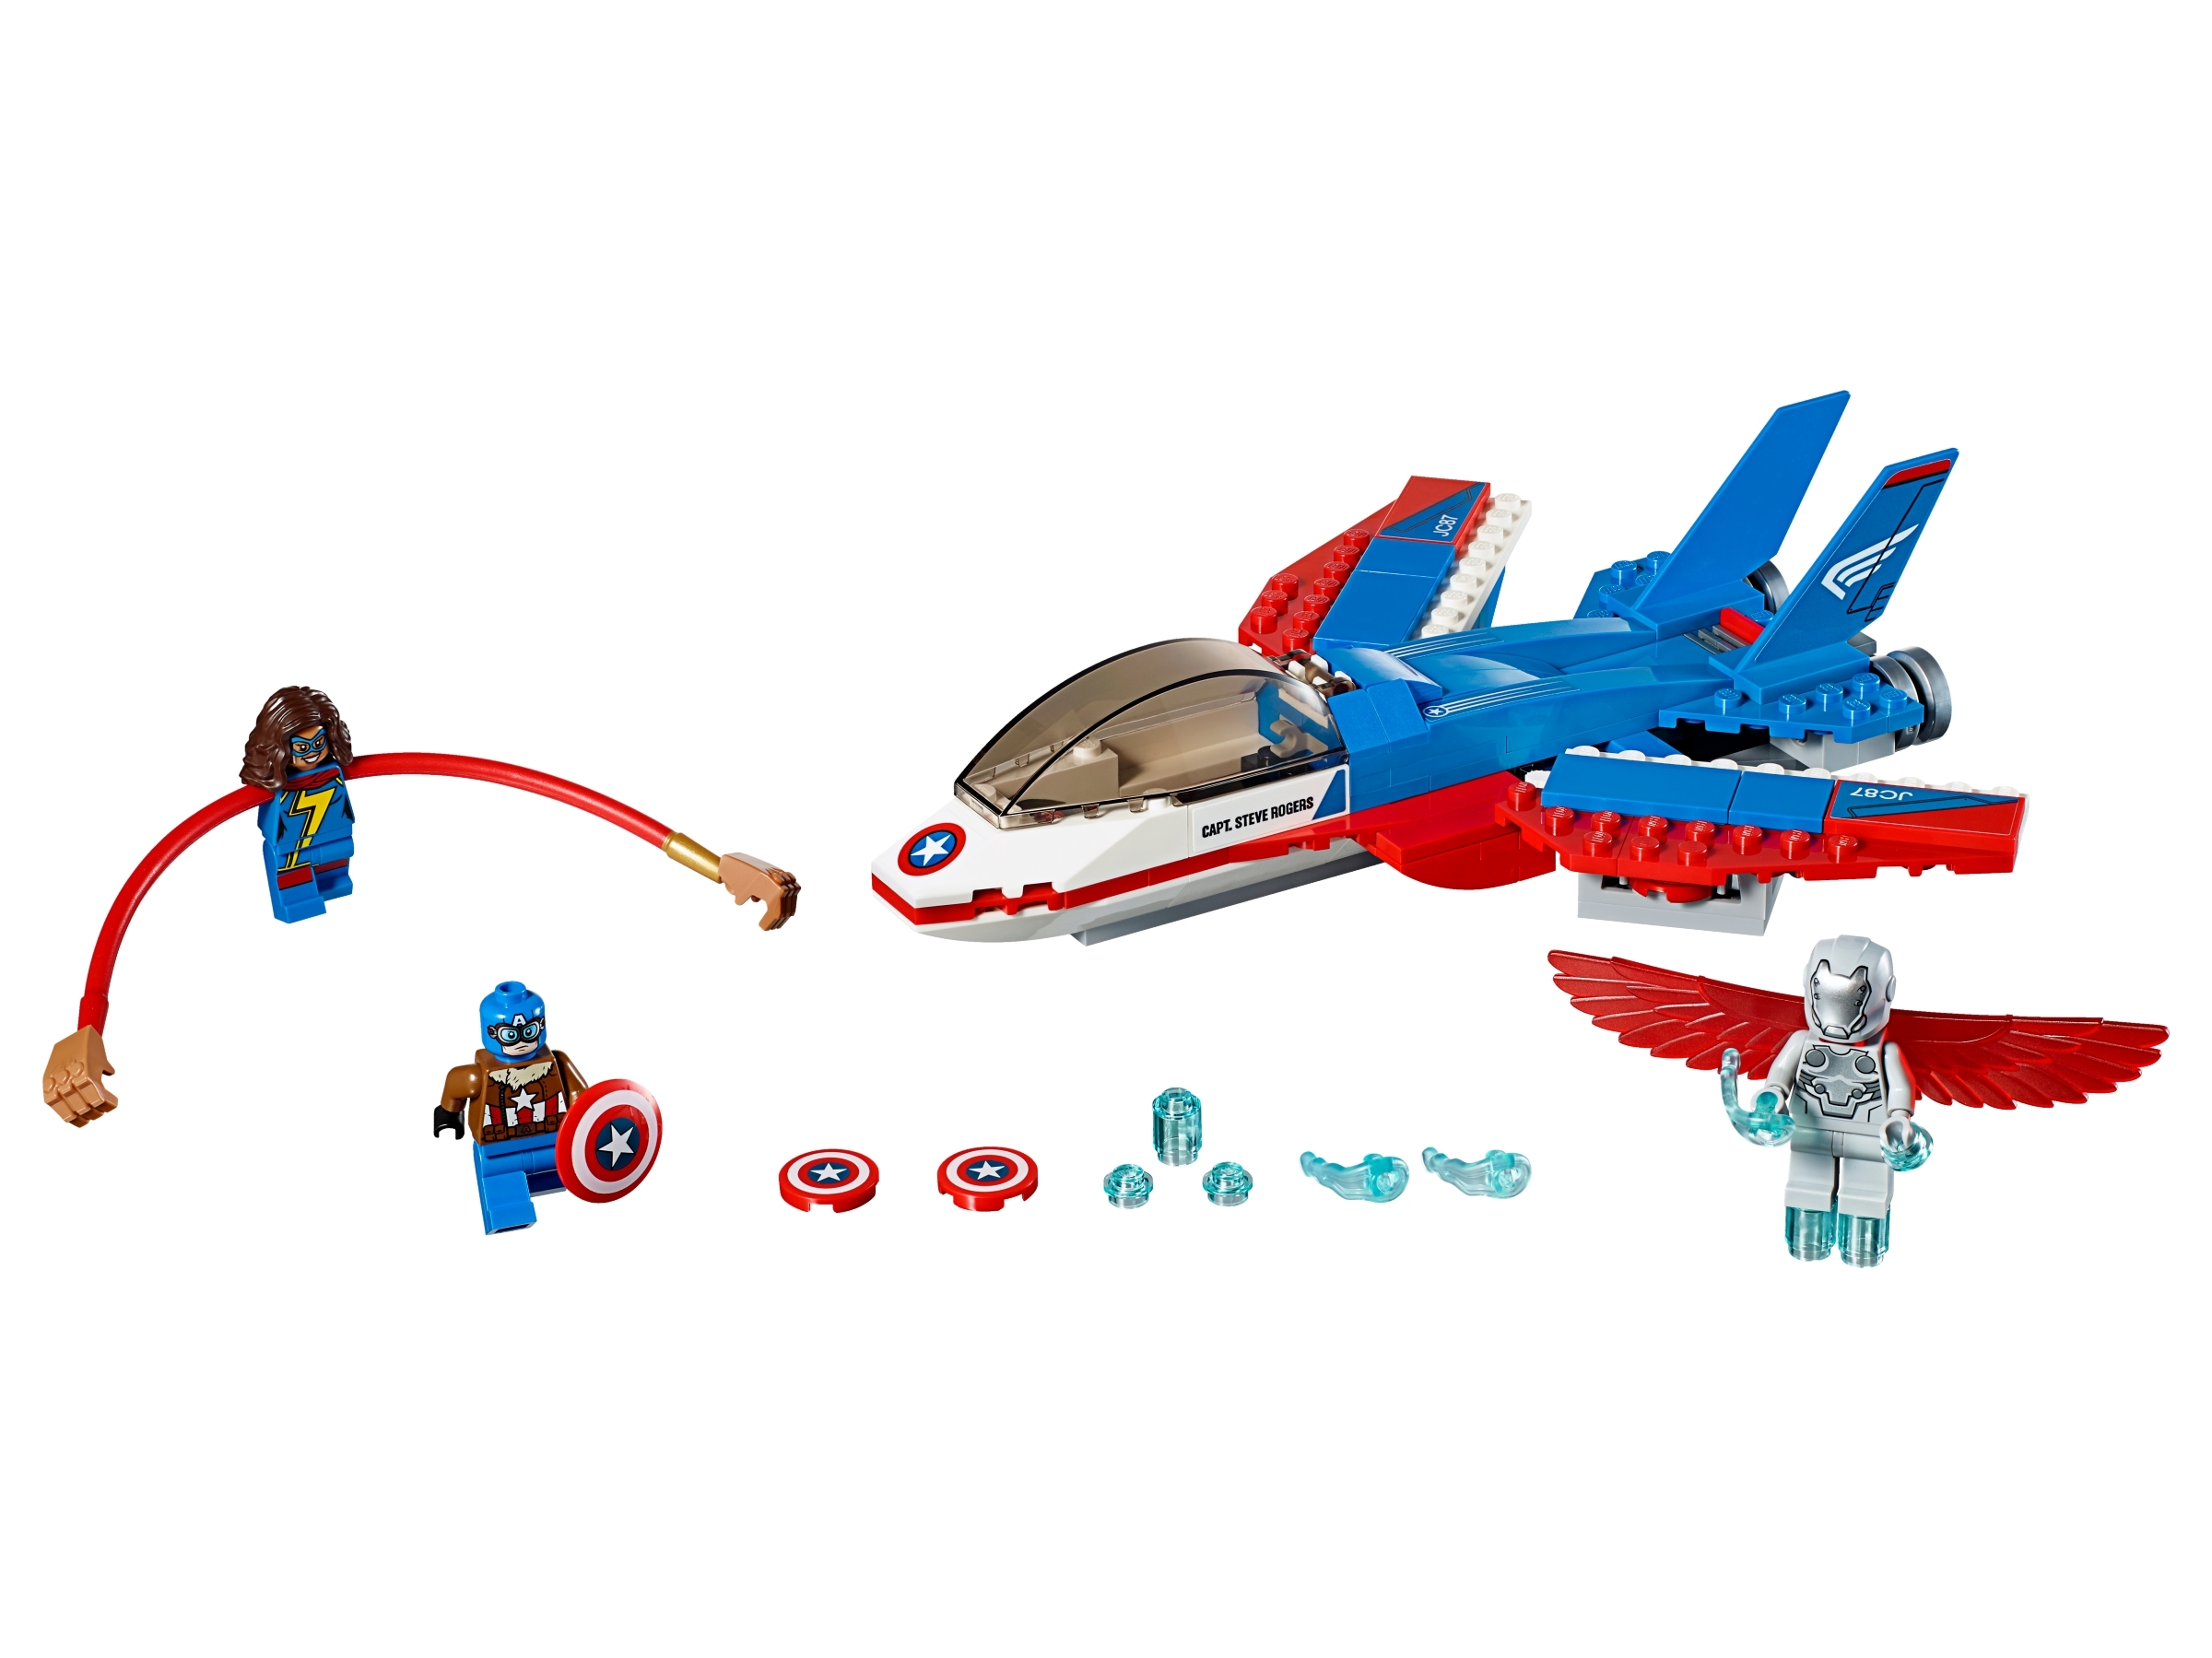 Lego Pilot Captain America 76076 Super Heroes Minifigure 